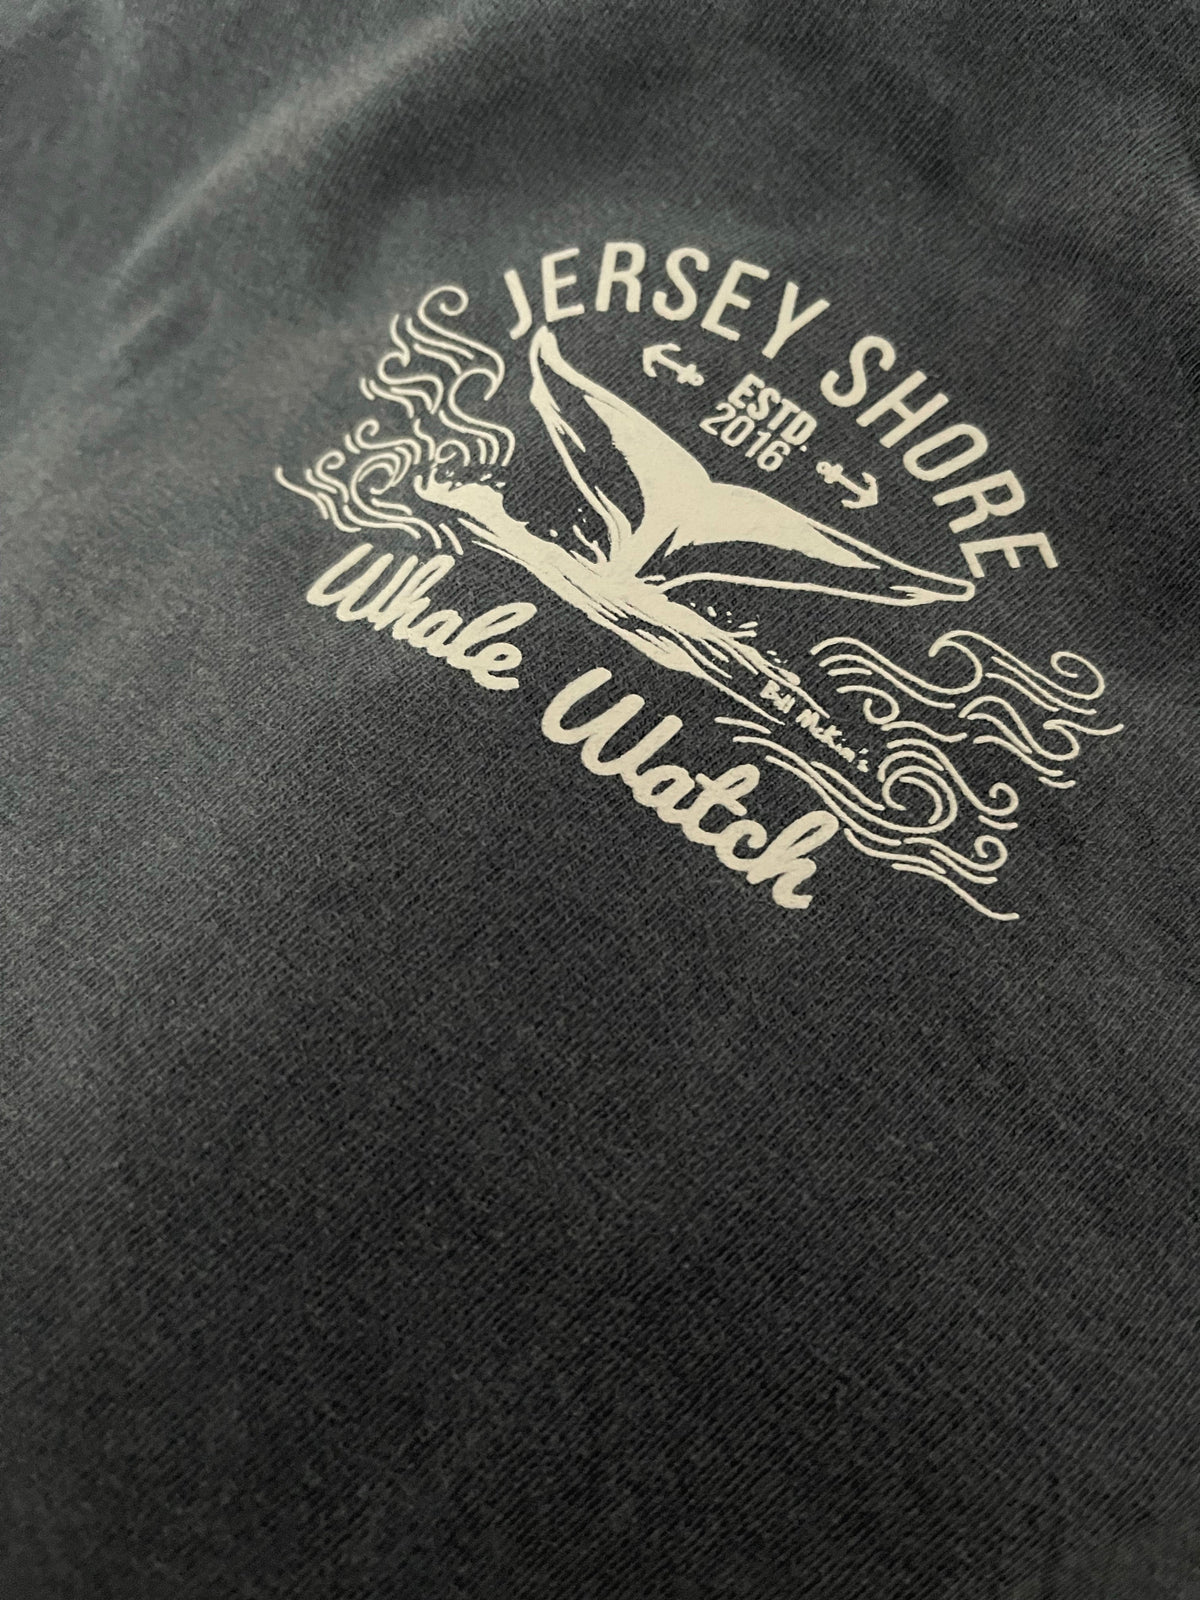 Jersey Shore Whale Watch Tshirt Amazing Quality Preshrunk Bill McKim Photography 